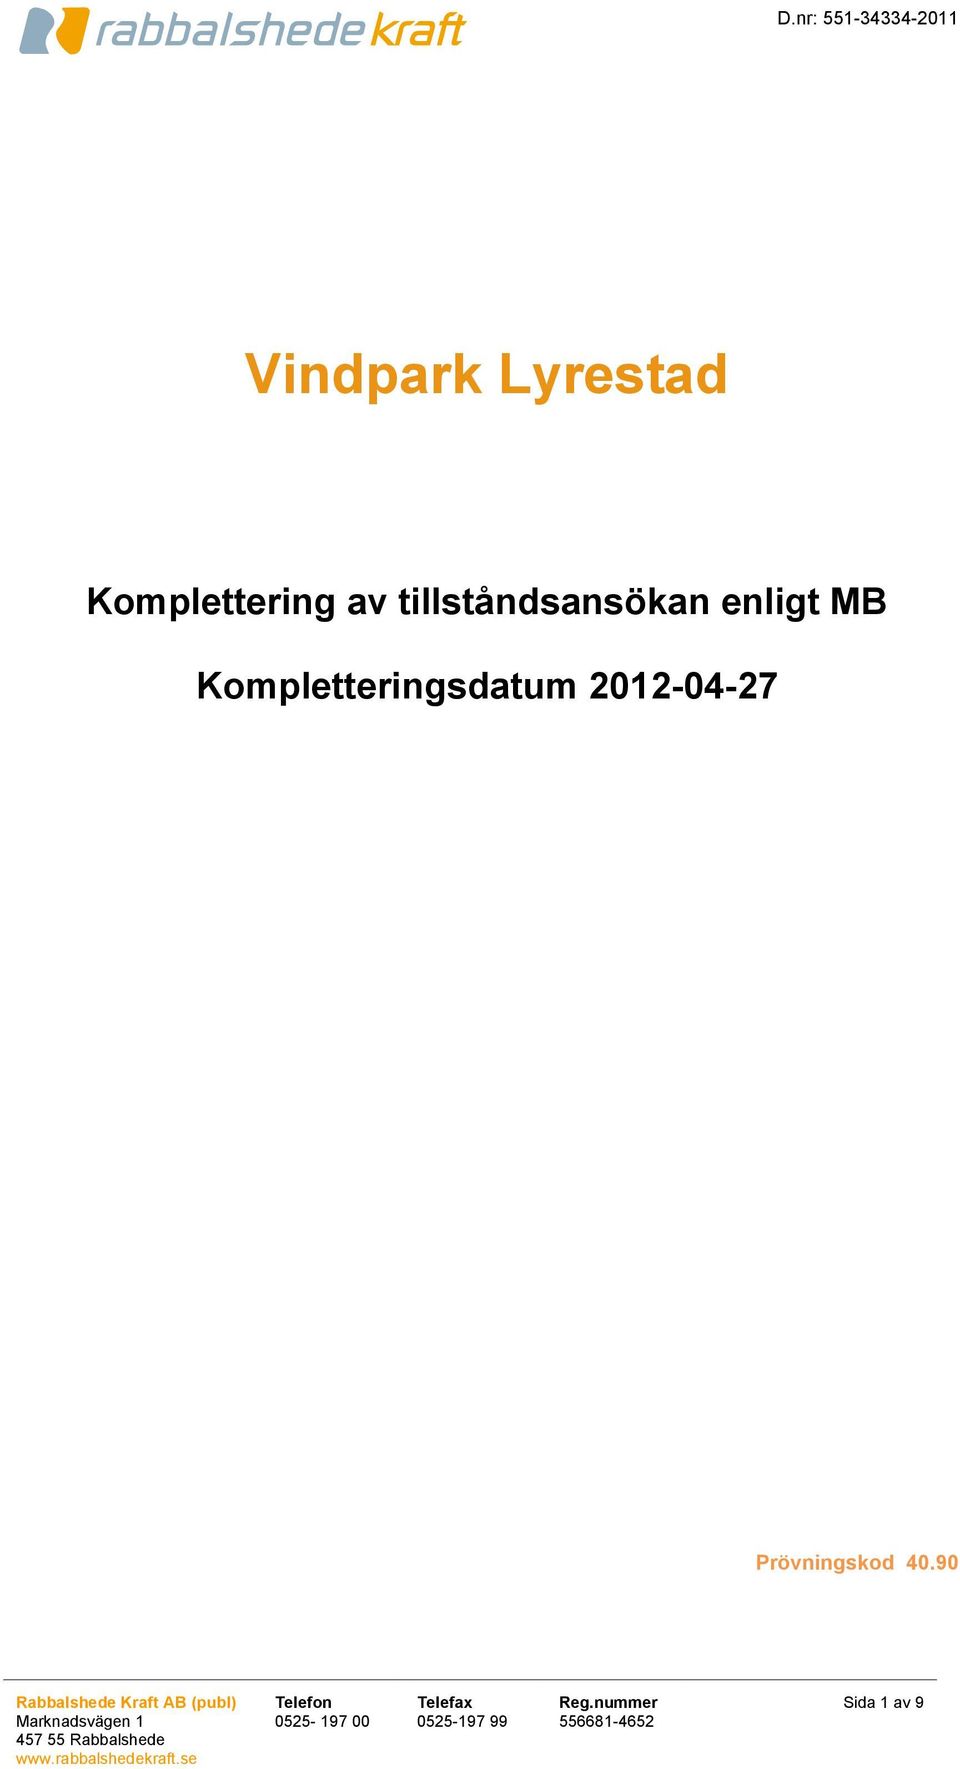 Kompletteringsdatum 2012-04-27 Prövningskod 40.